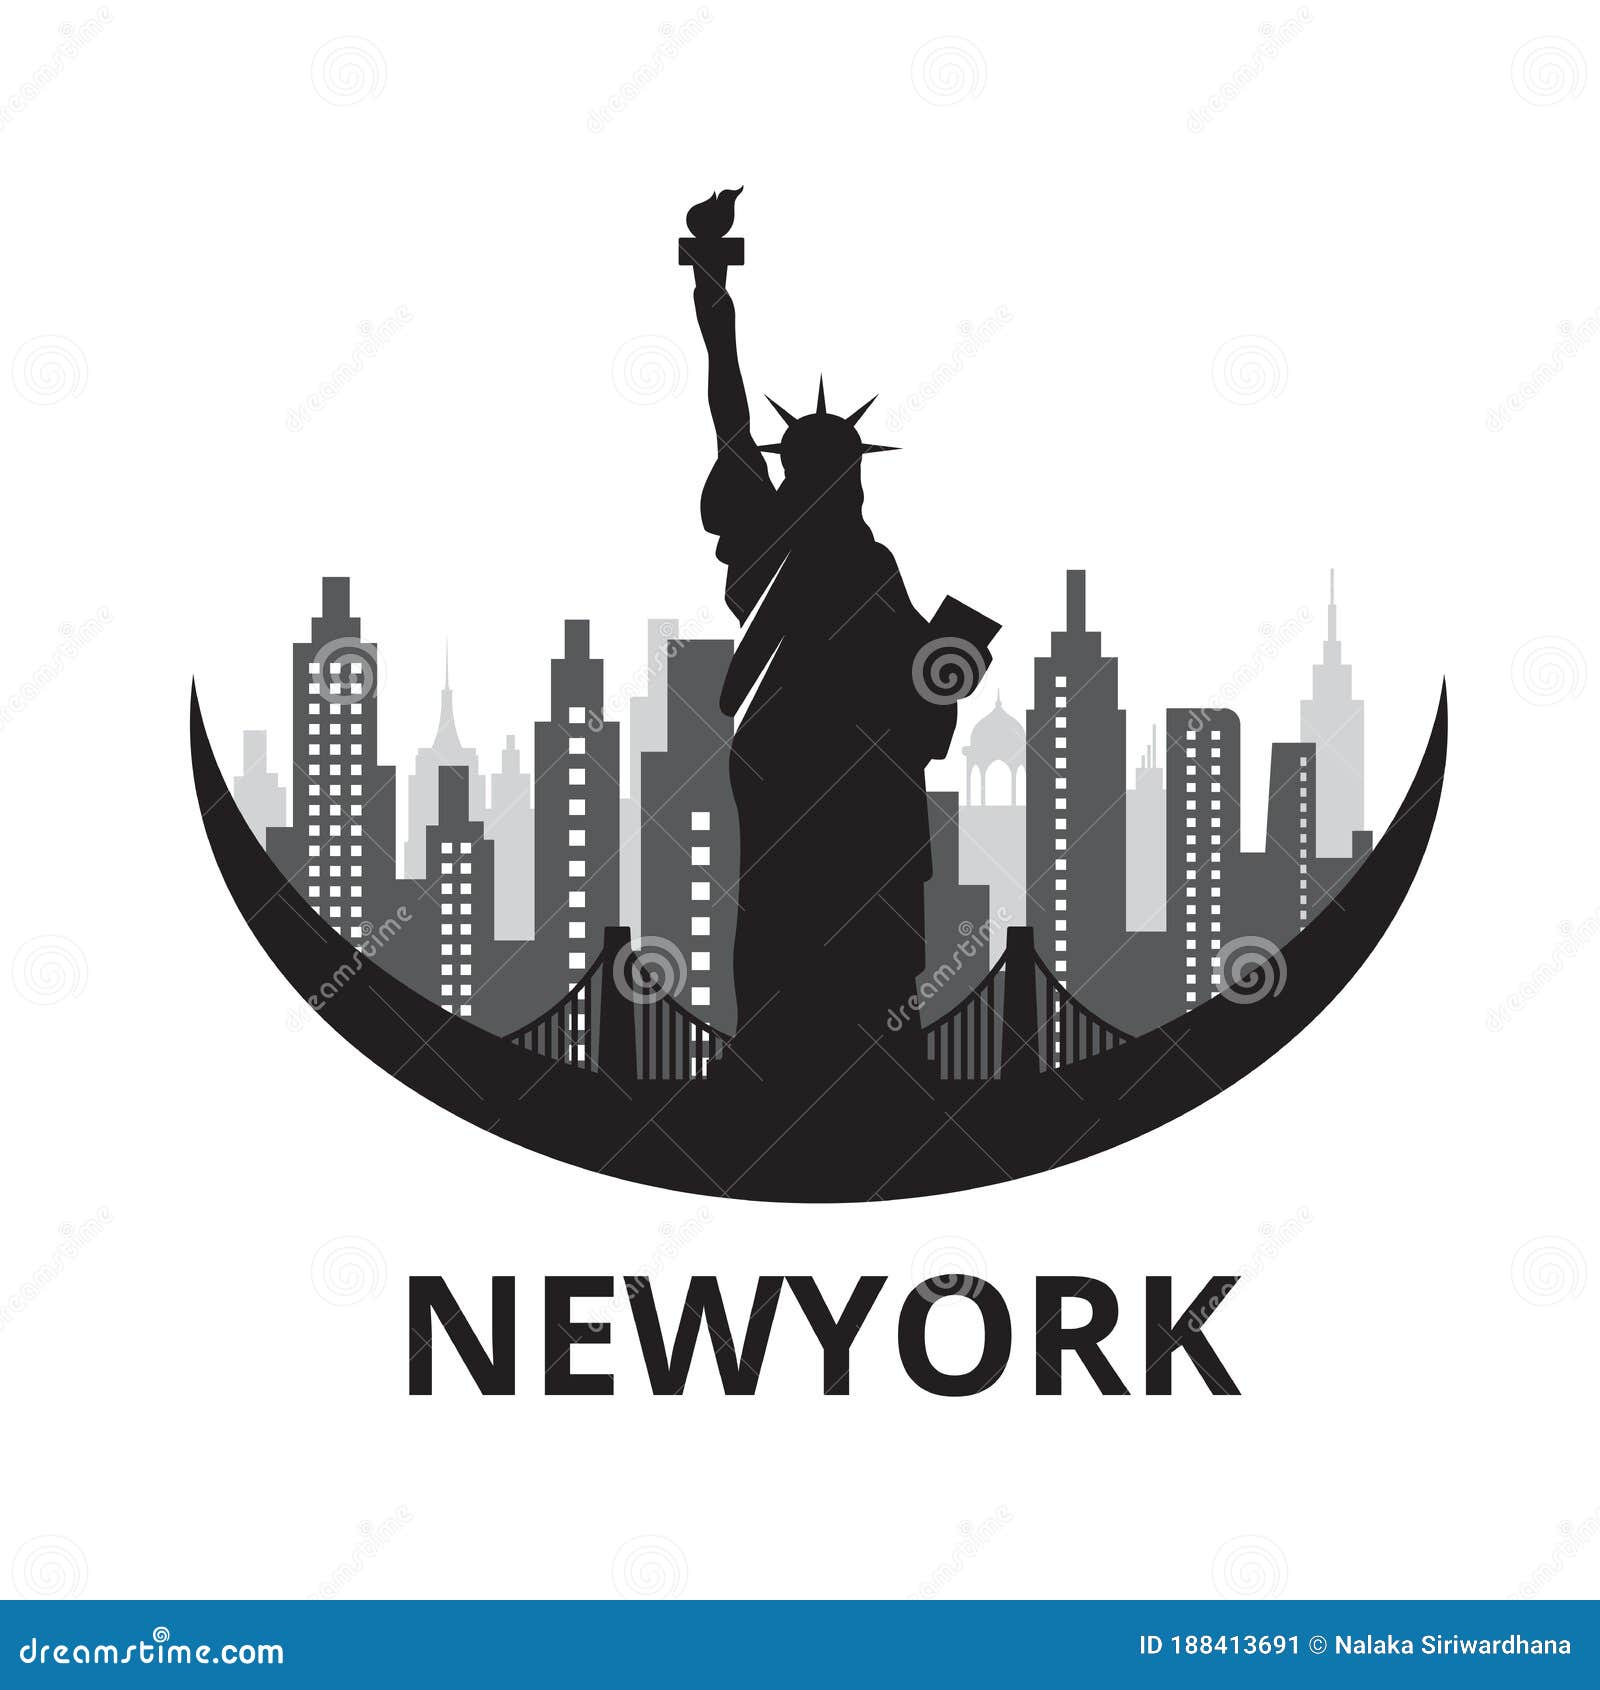 newyork city skyline black color .